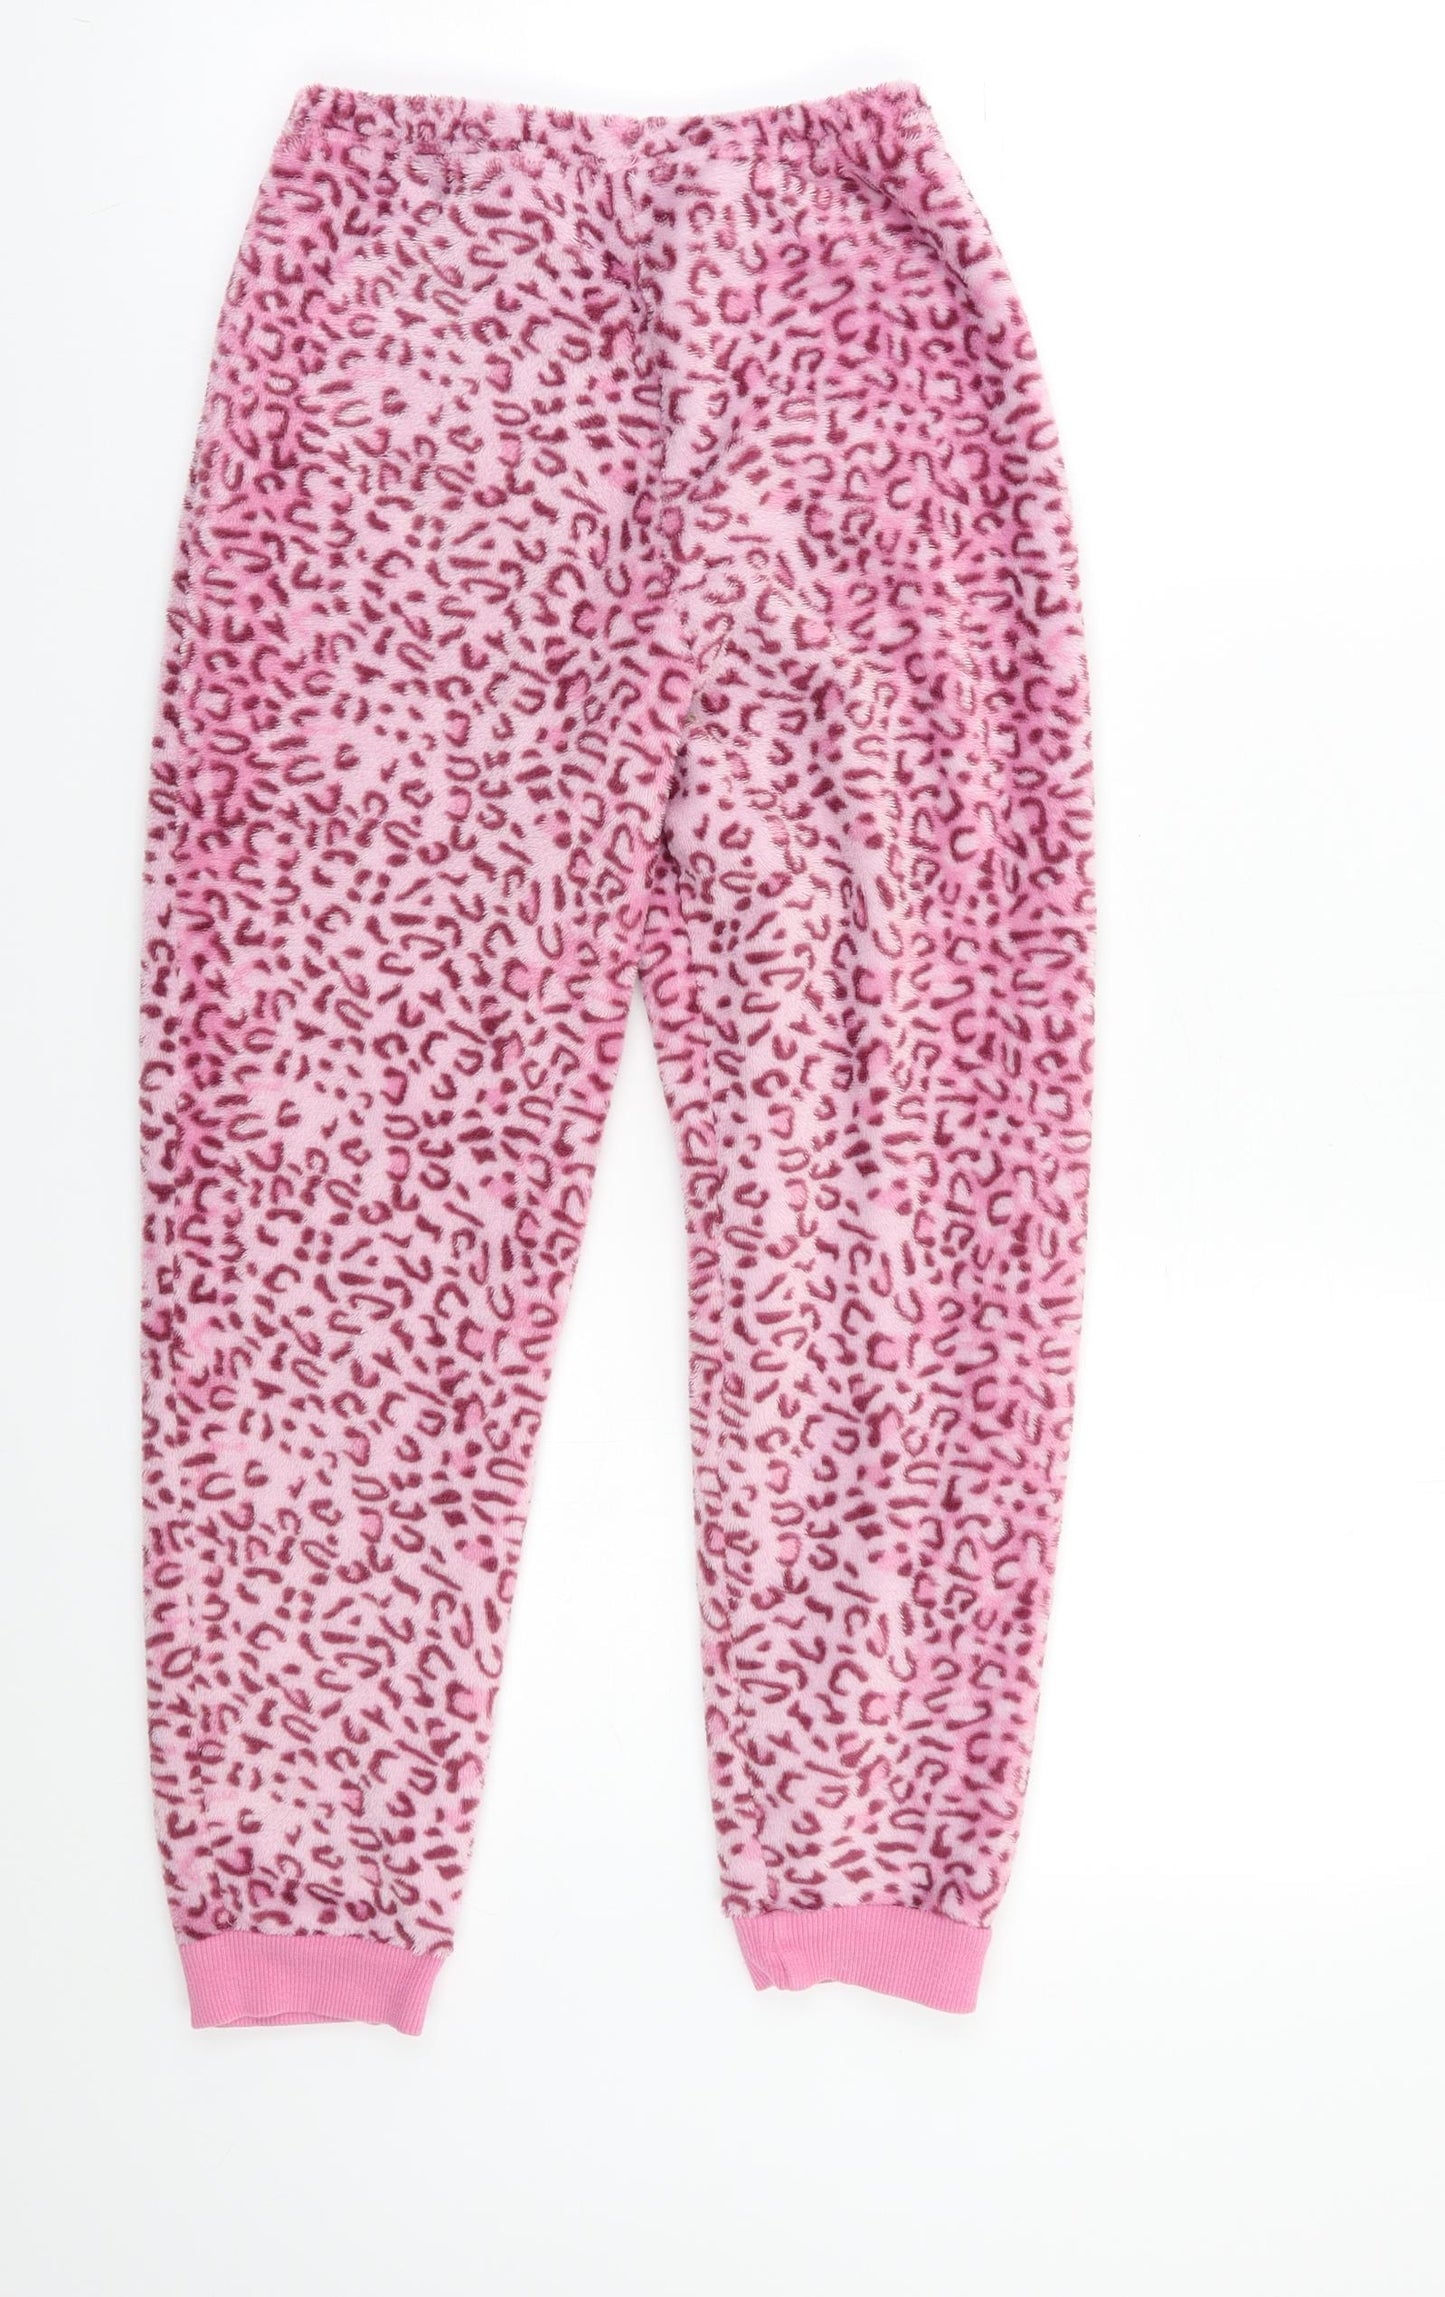 Primark Girls Pink Animal Print   Pyjama Pants Size 10 Years